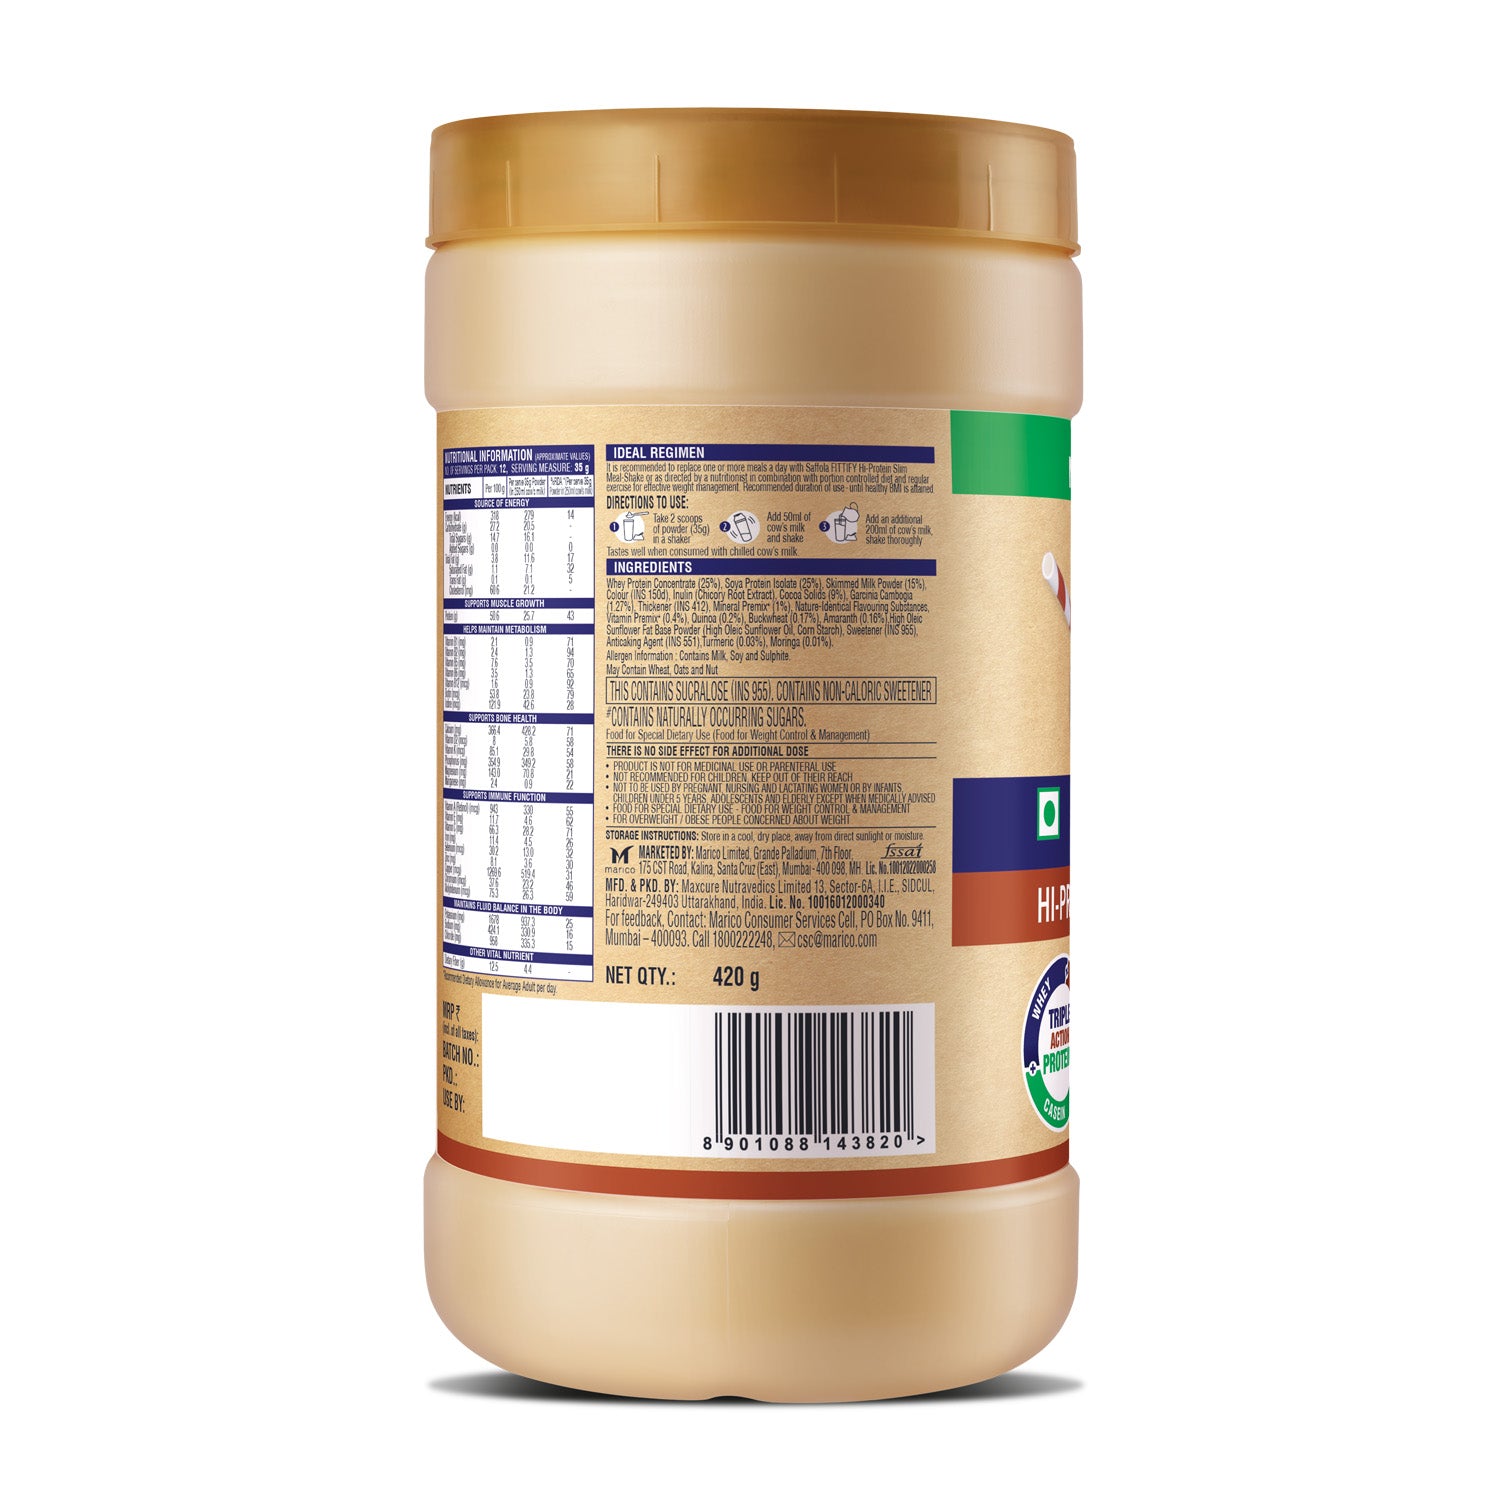 Saffola Fittify Hi-Protein Slim Meal Shake - Swiss Chocolate  420g + Pistachio Almond 420g